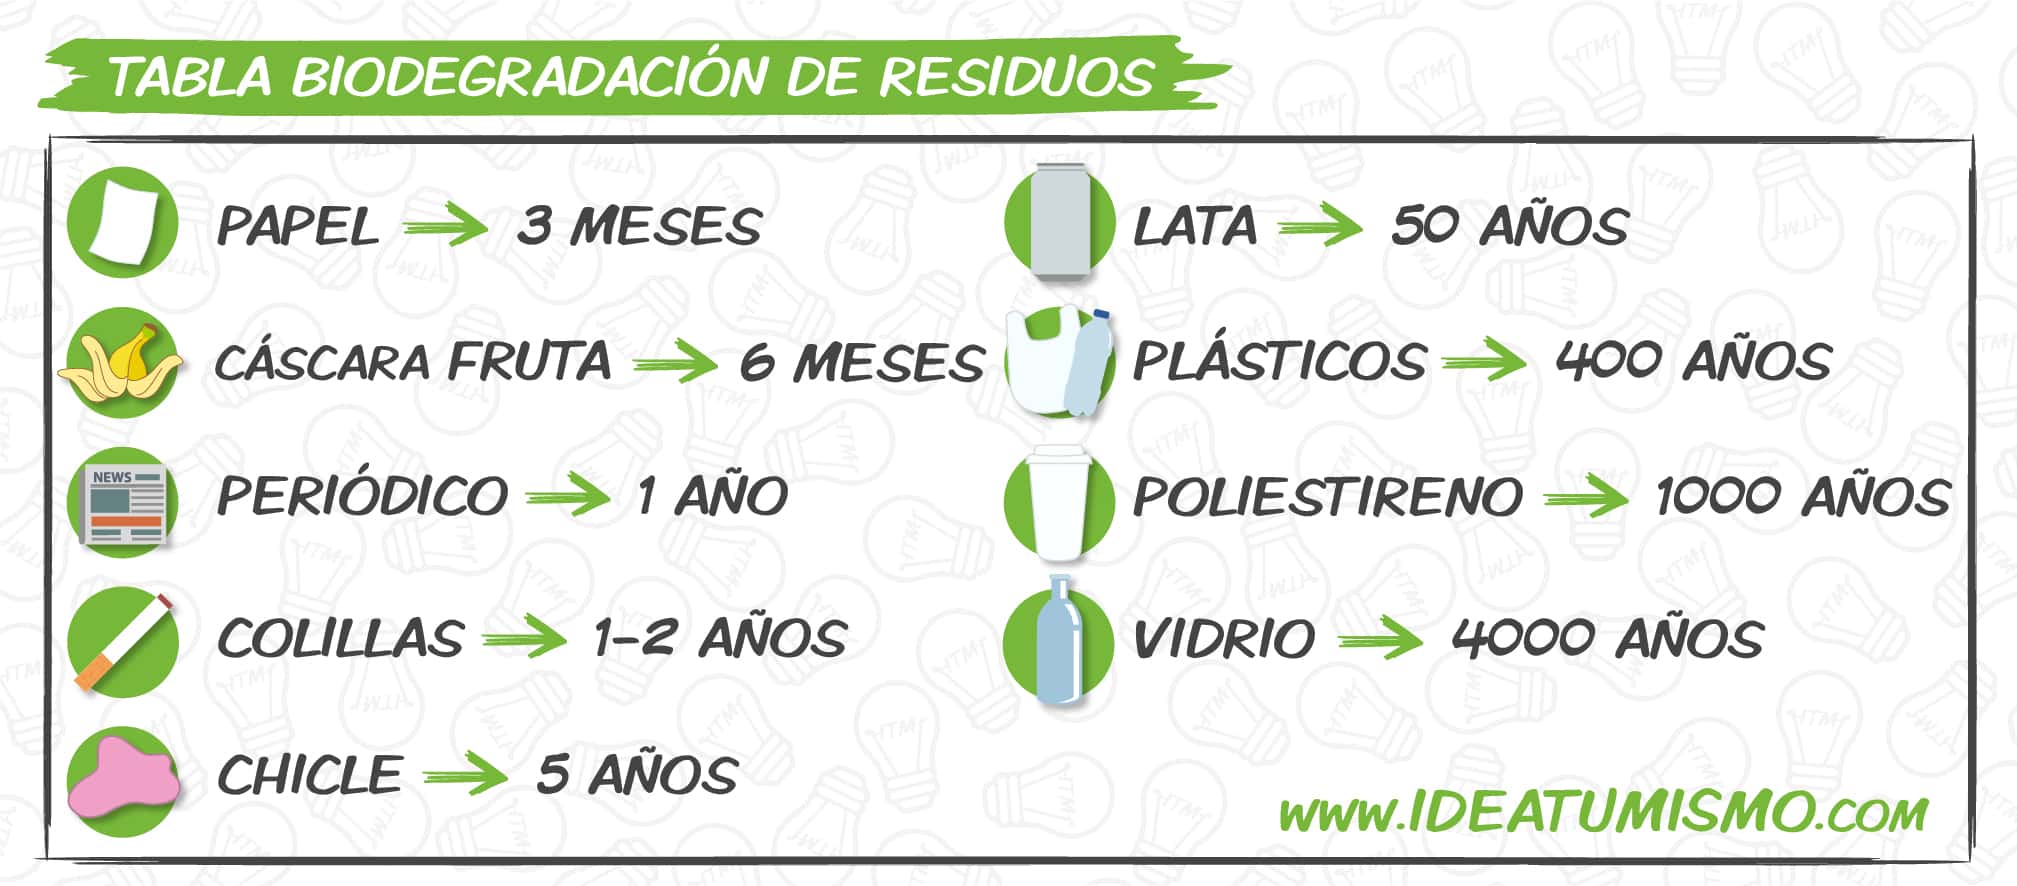 biodegradacion-residuos